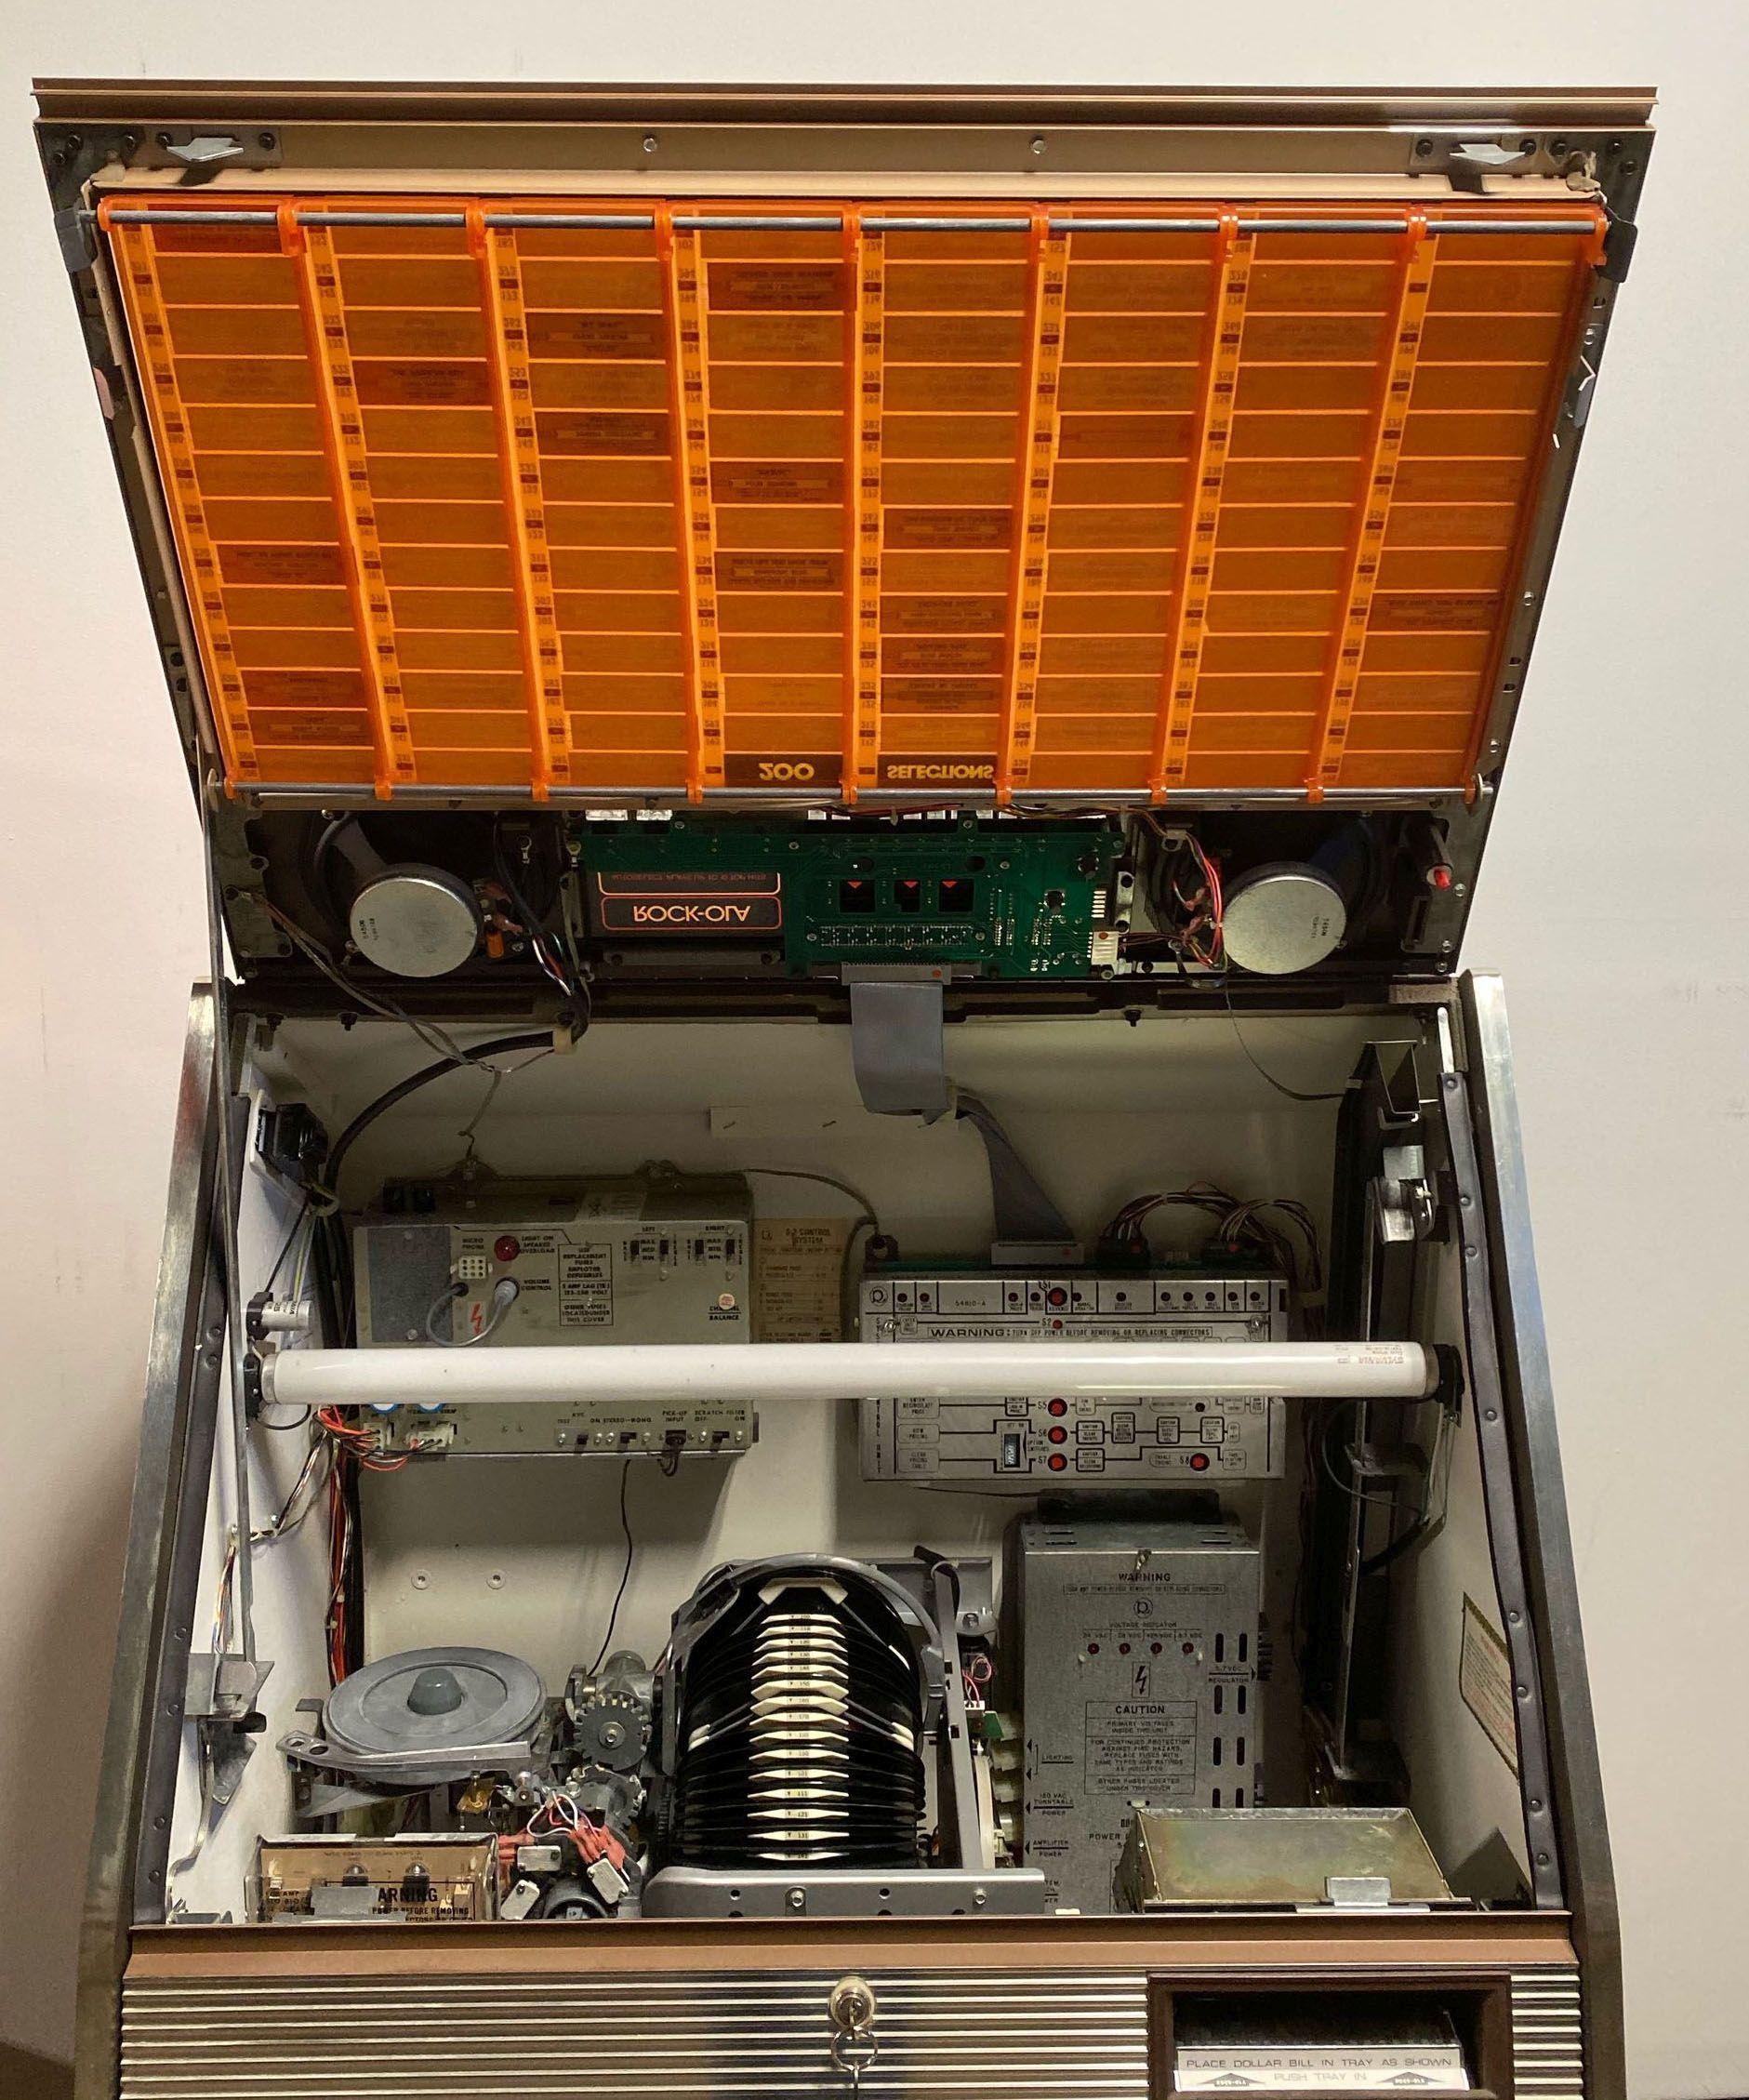 ROCK-OLA Jukebox, Model 494-2, Serial 49171